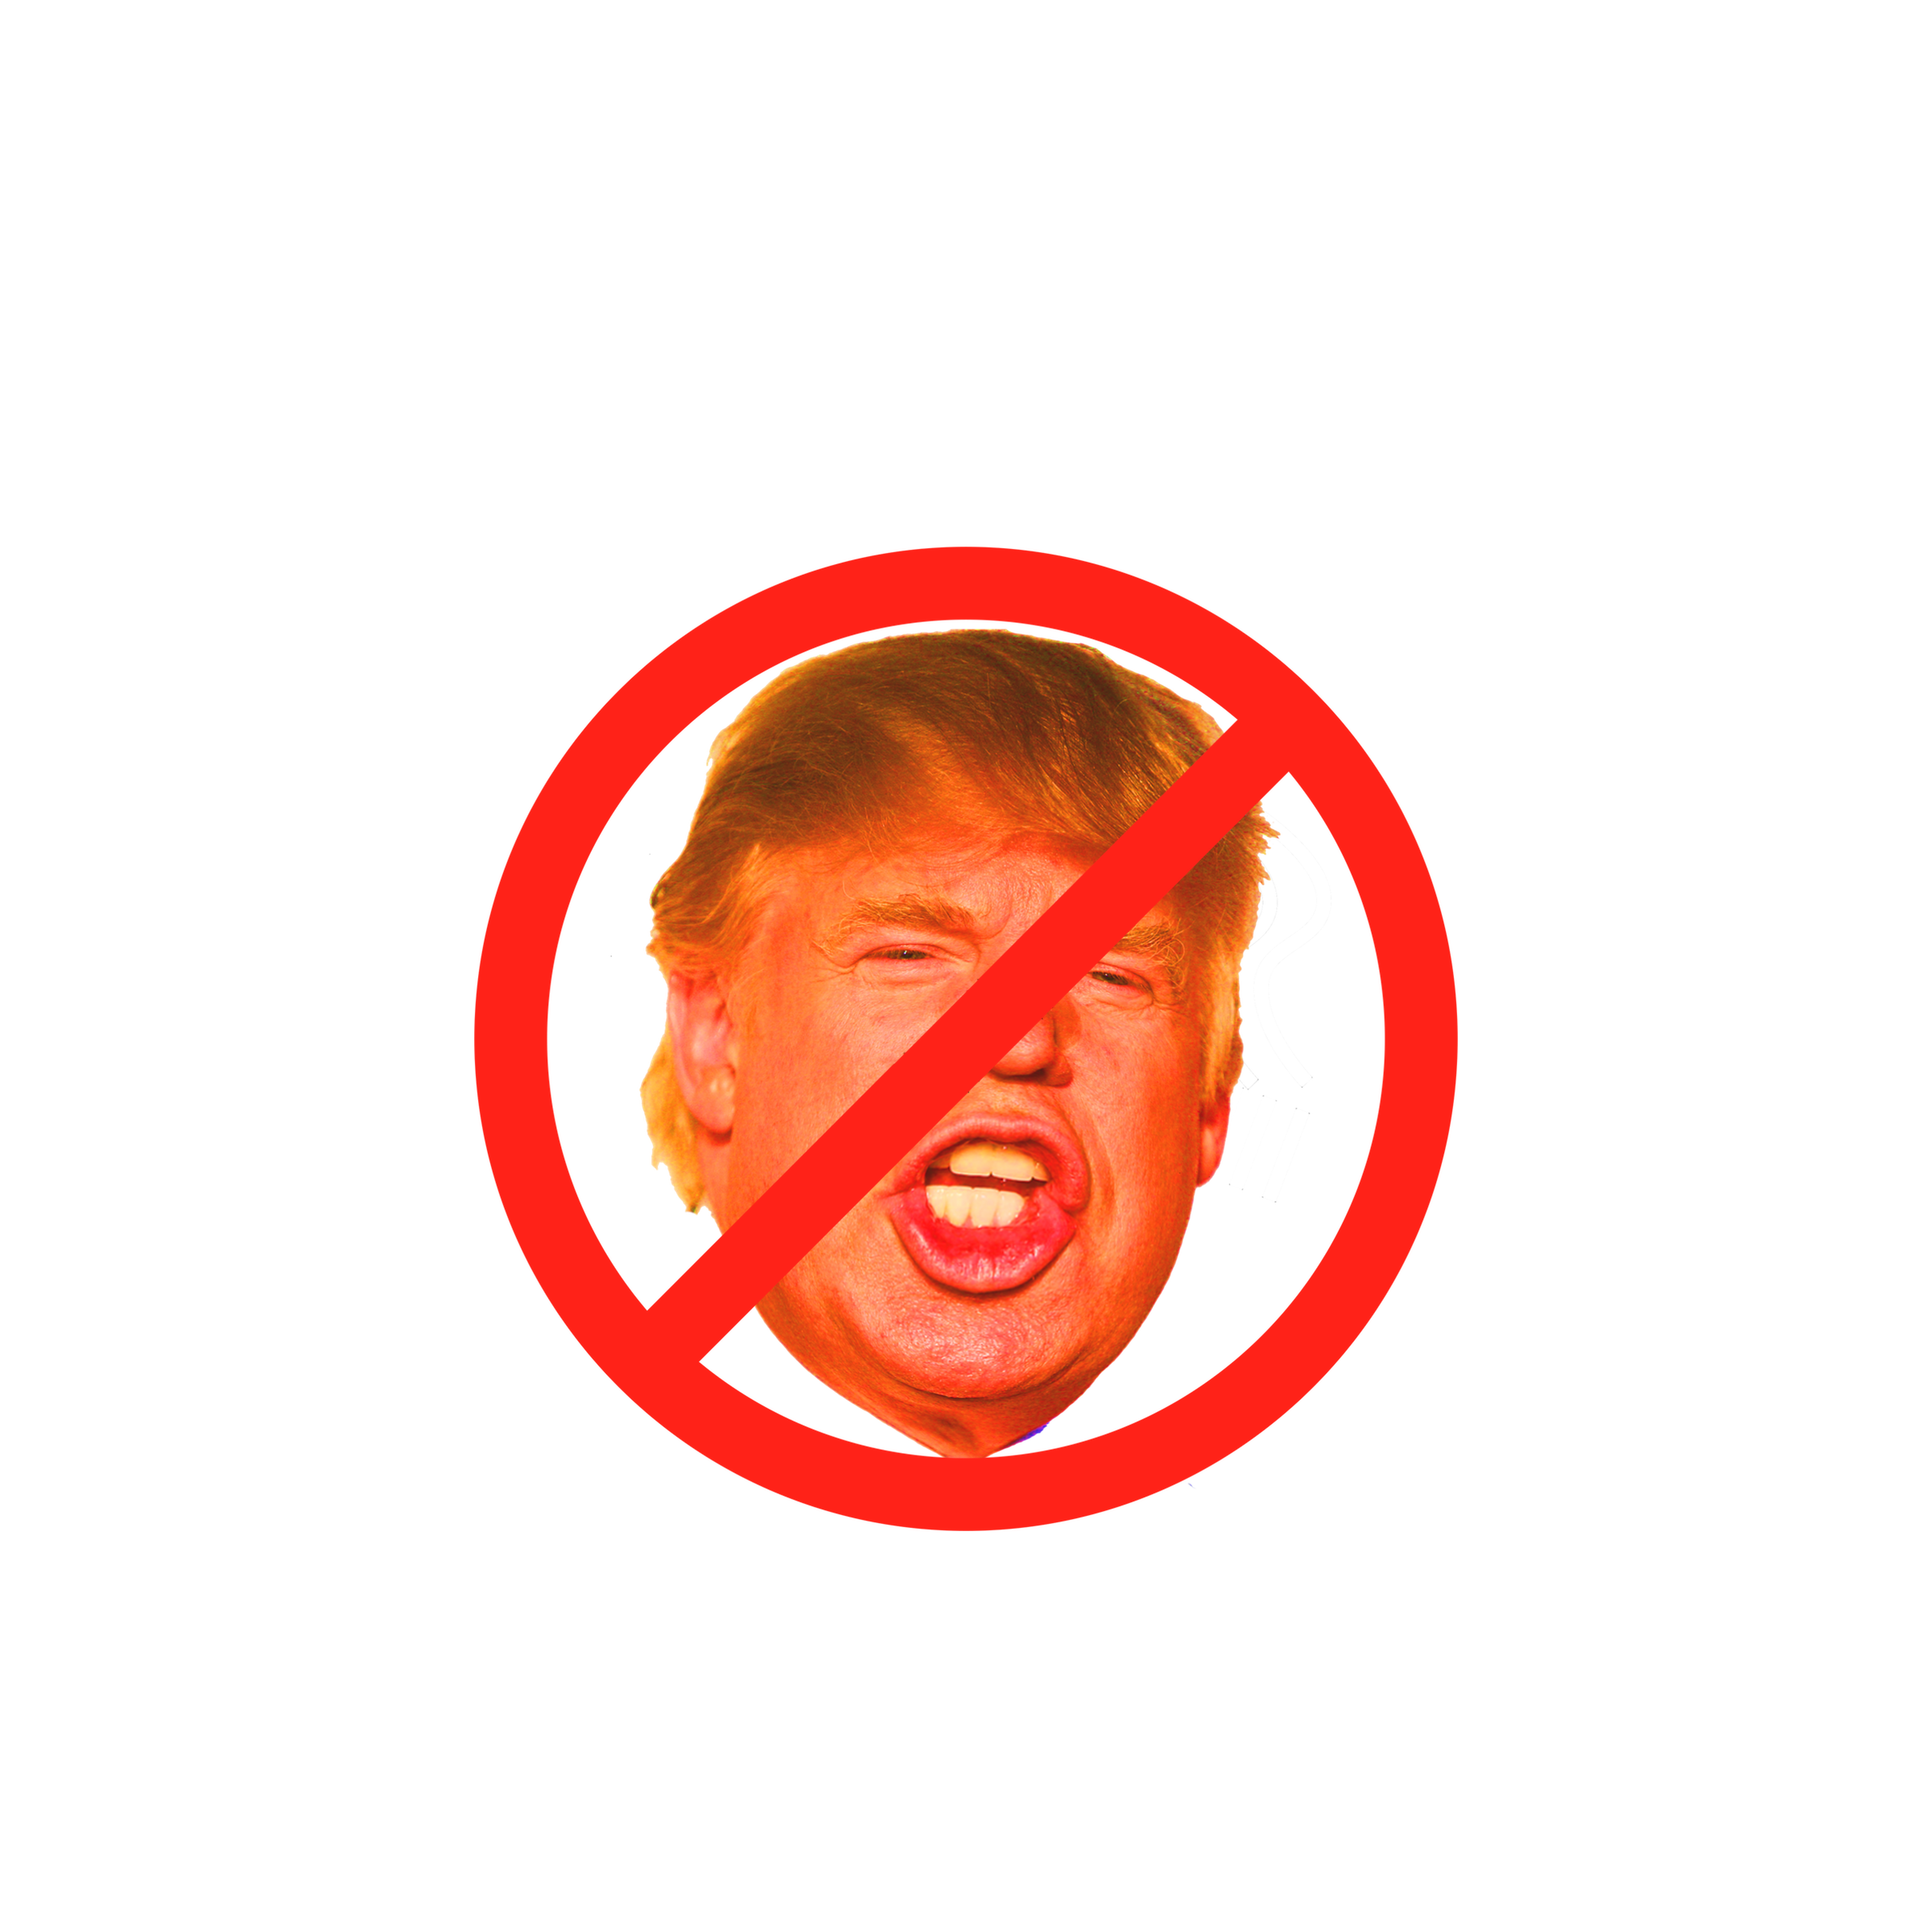 Donald Trump: Worst President Ever